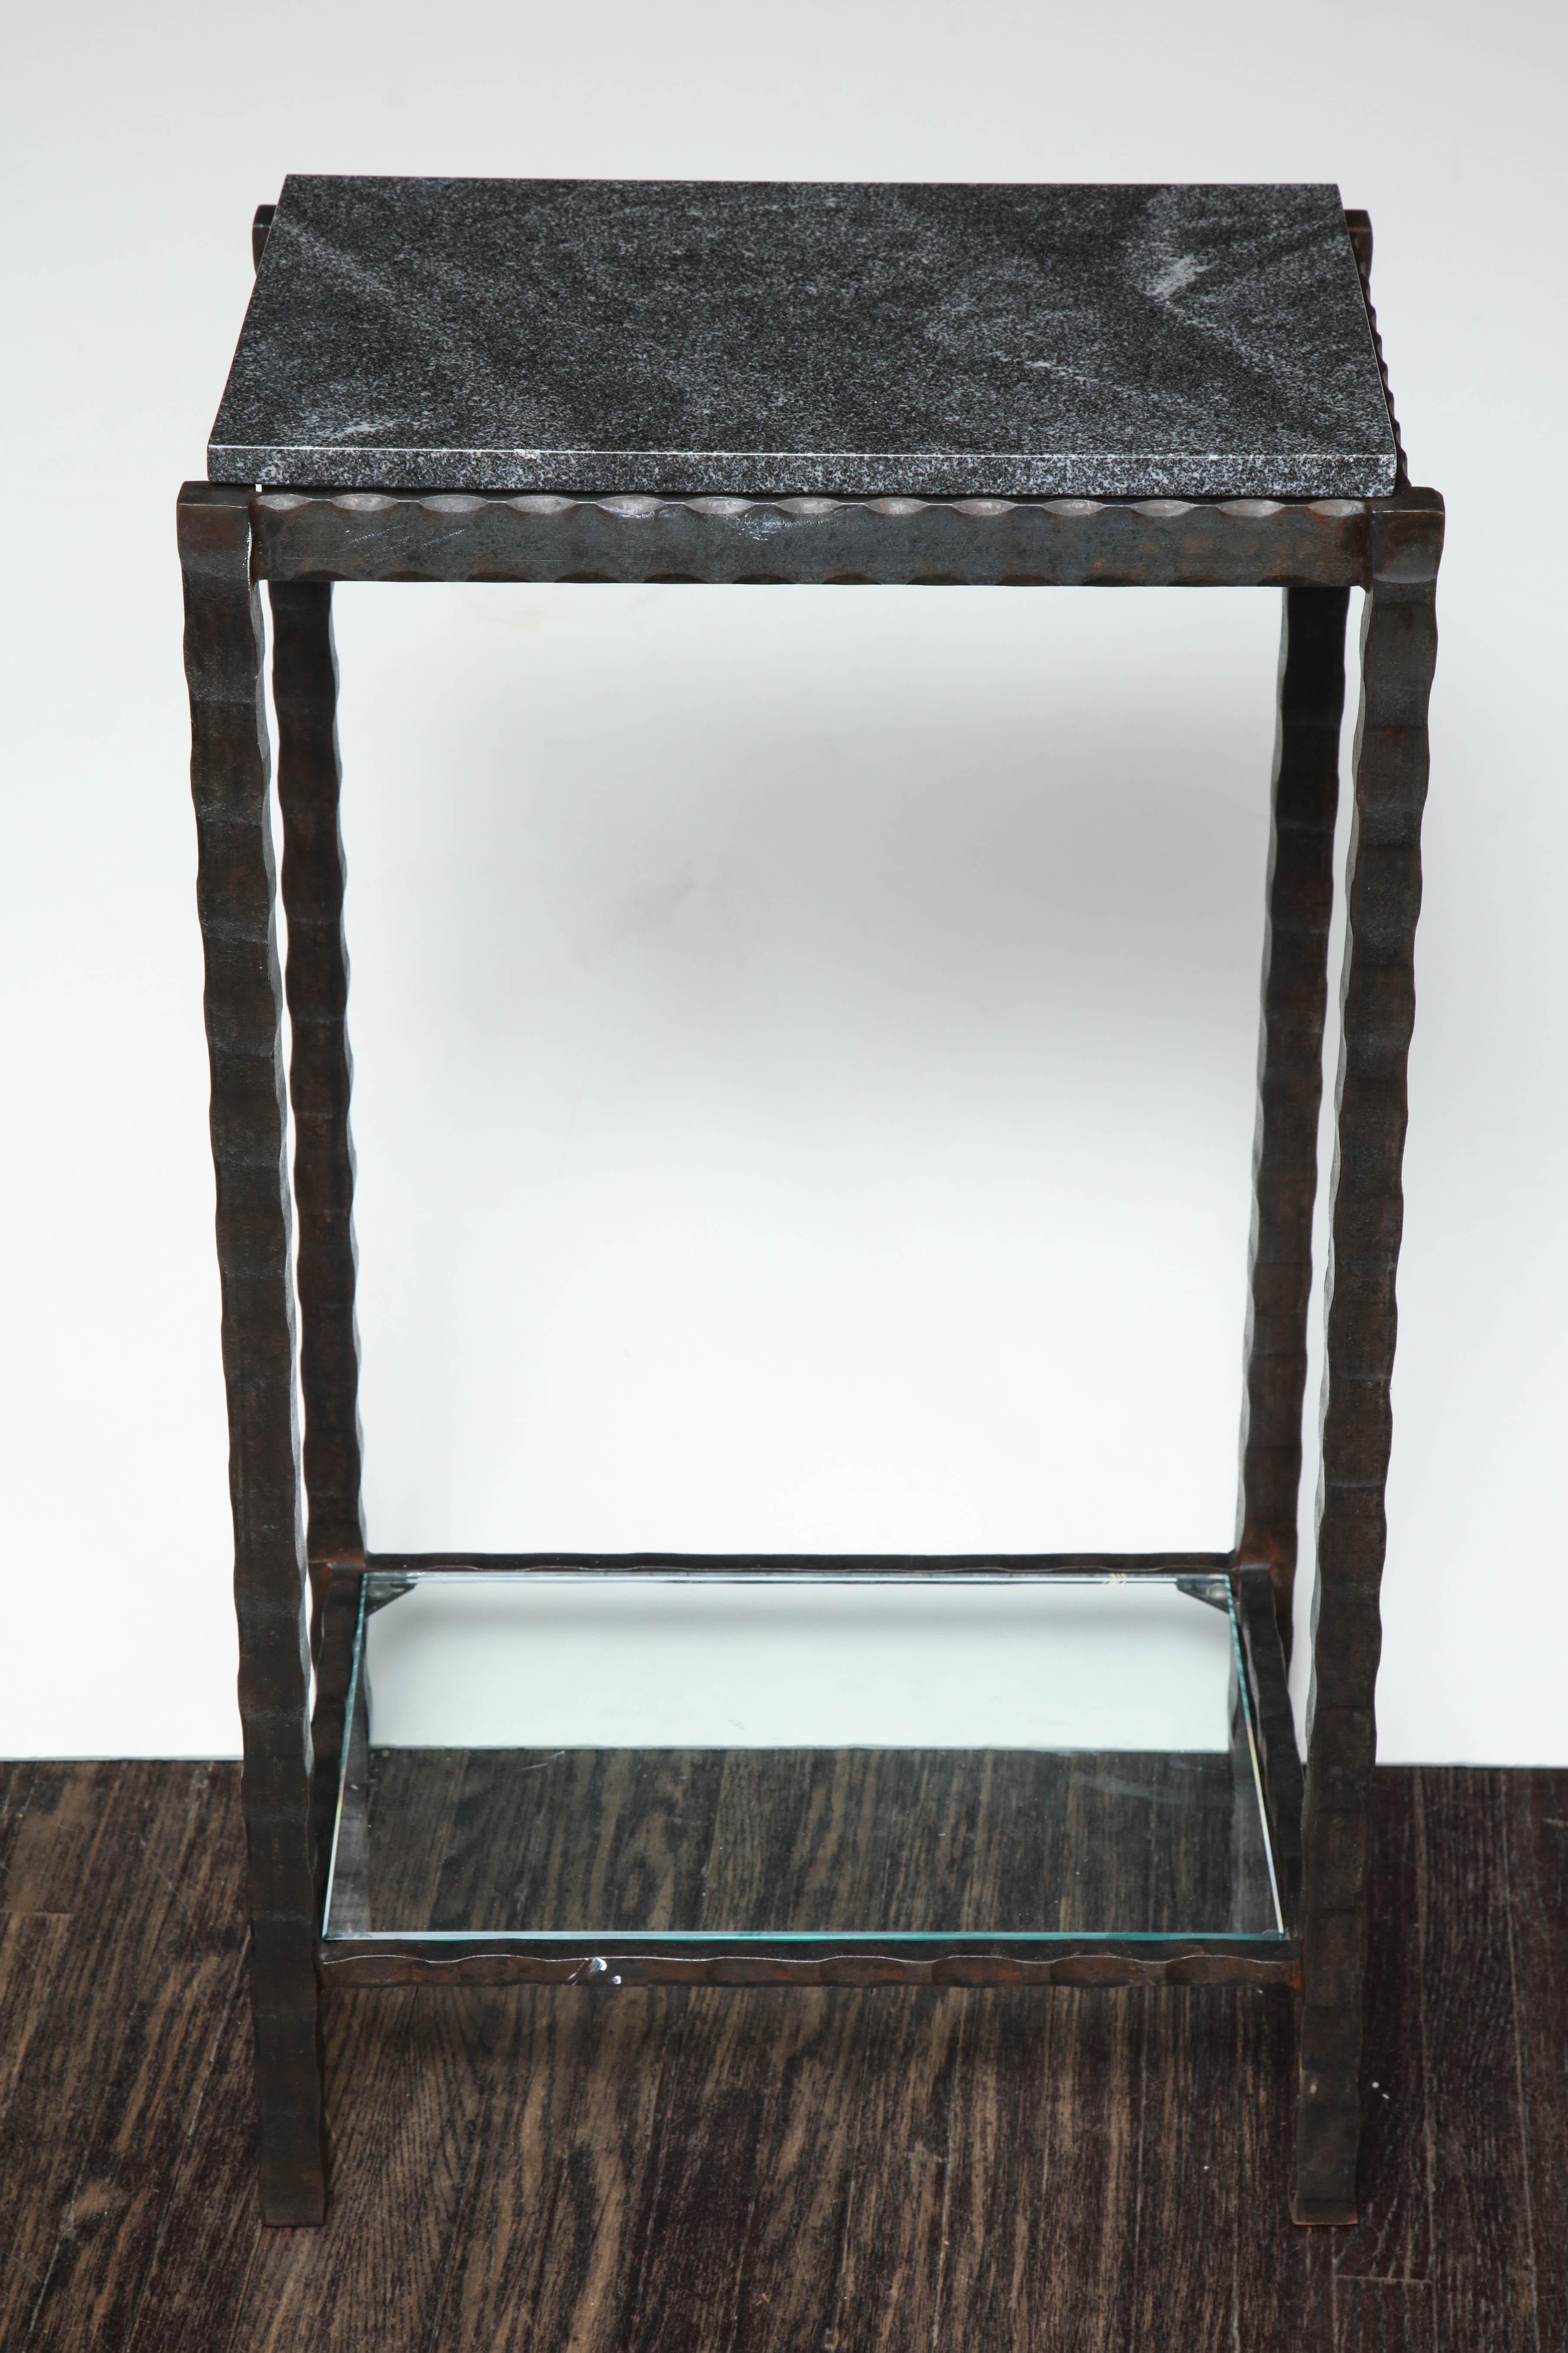 Top: Dazzling dark gray granite
Bottom shelf: Clear glass
Frame: Hammered steel with black wax patina.